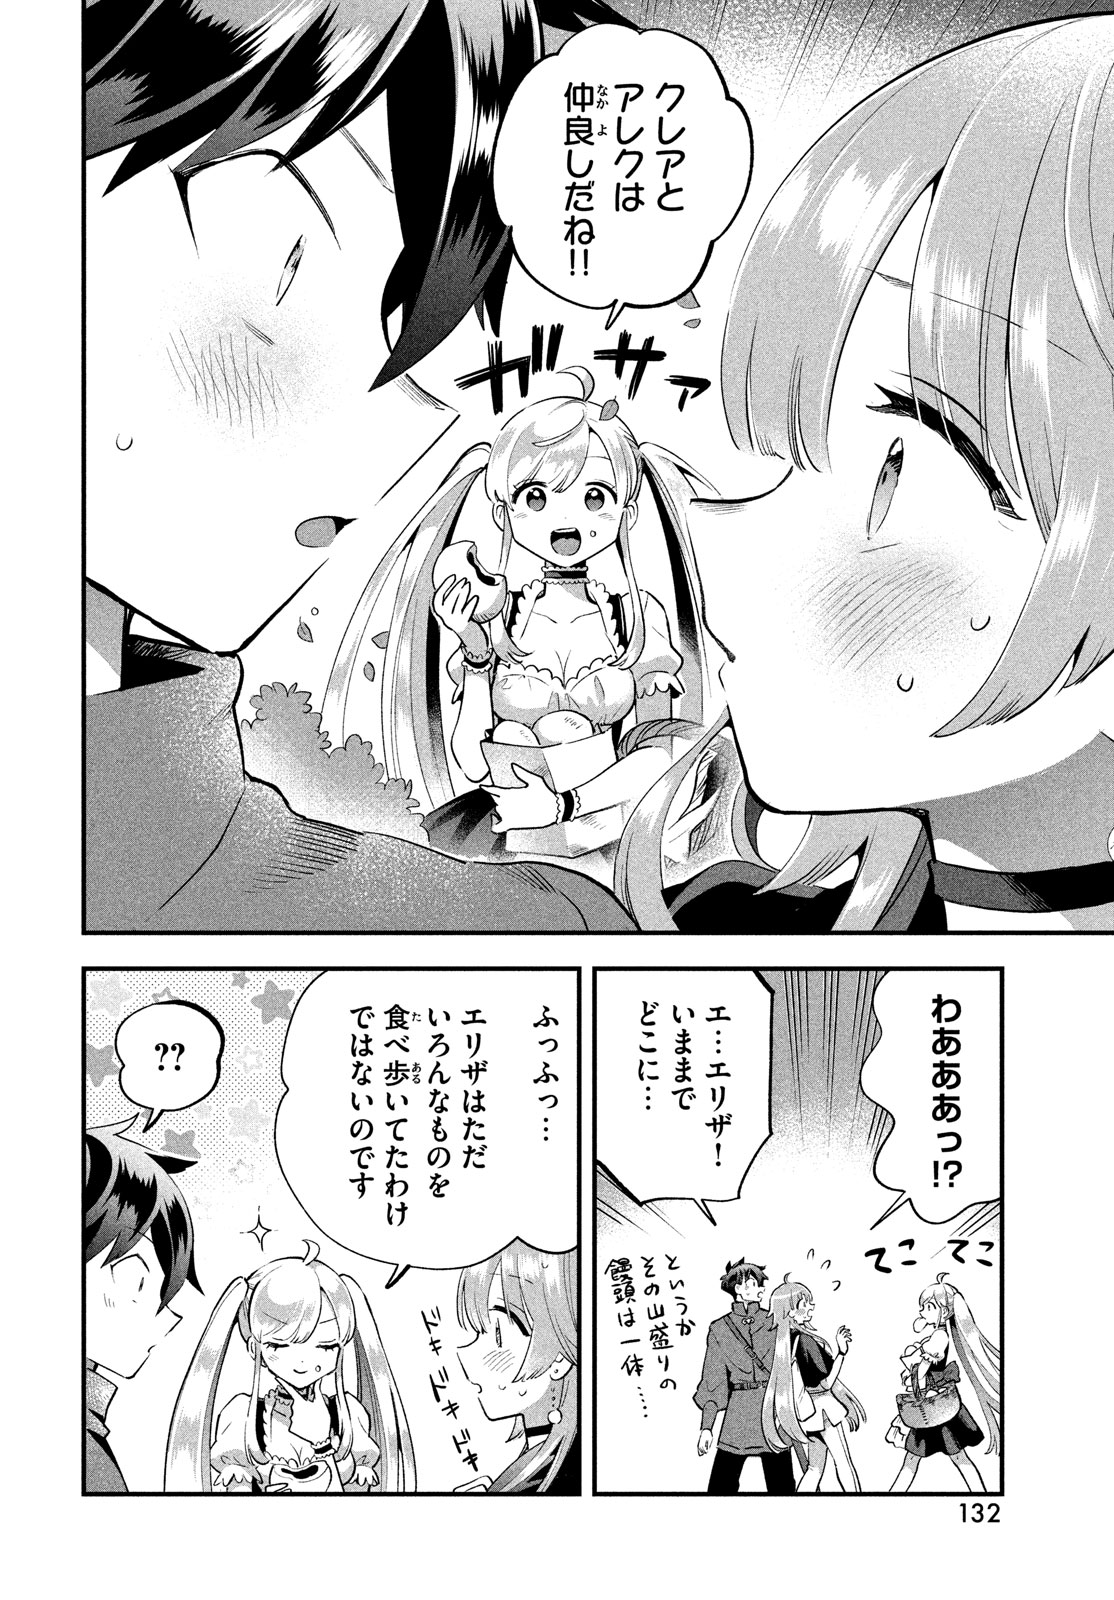 7-nin no Nemuri Hime - Chapter 41 - Page 12